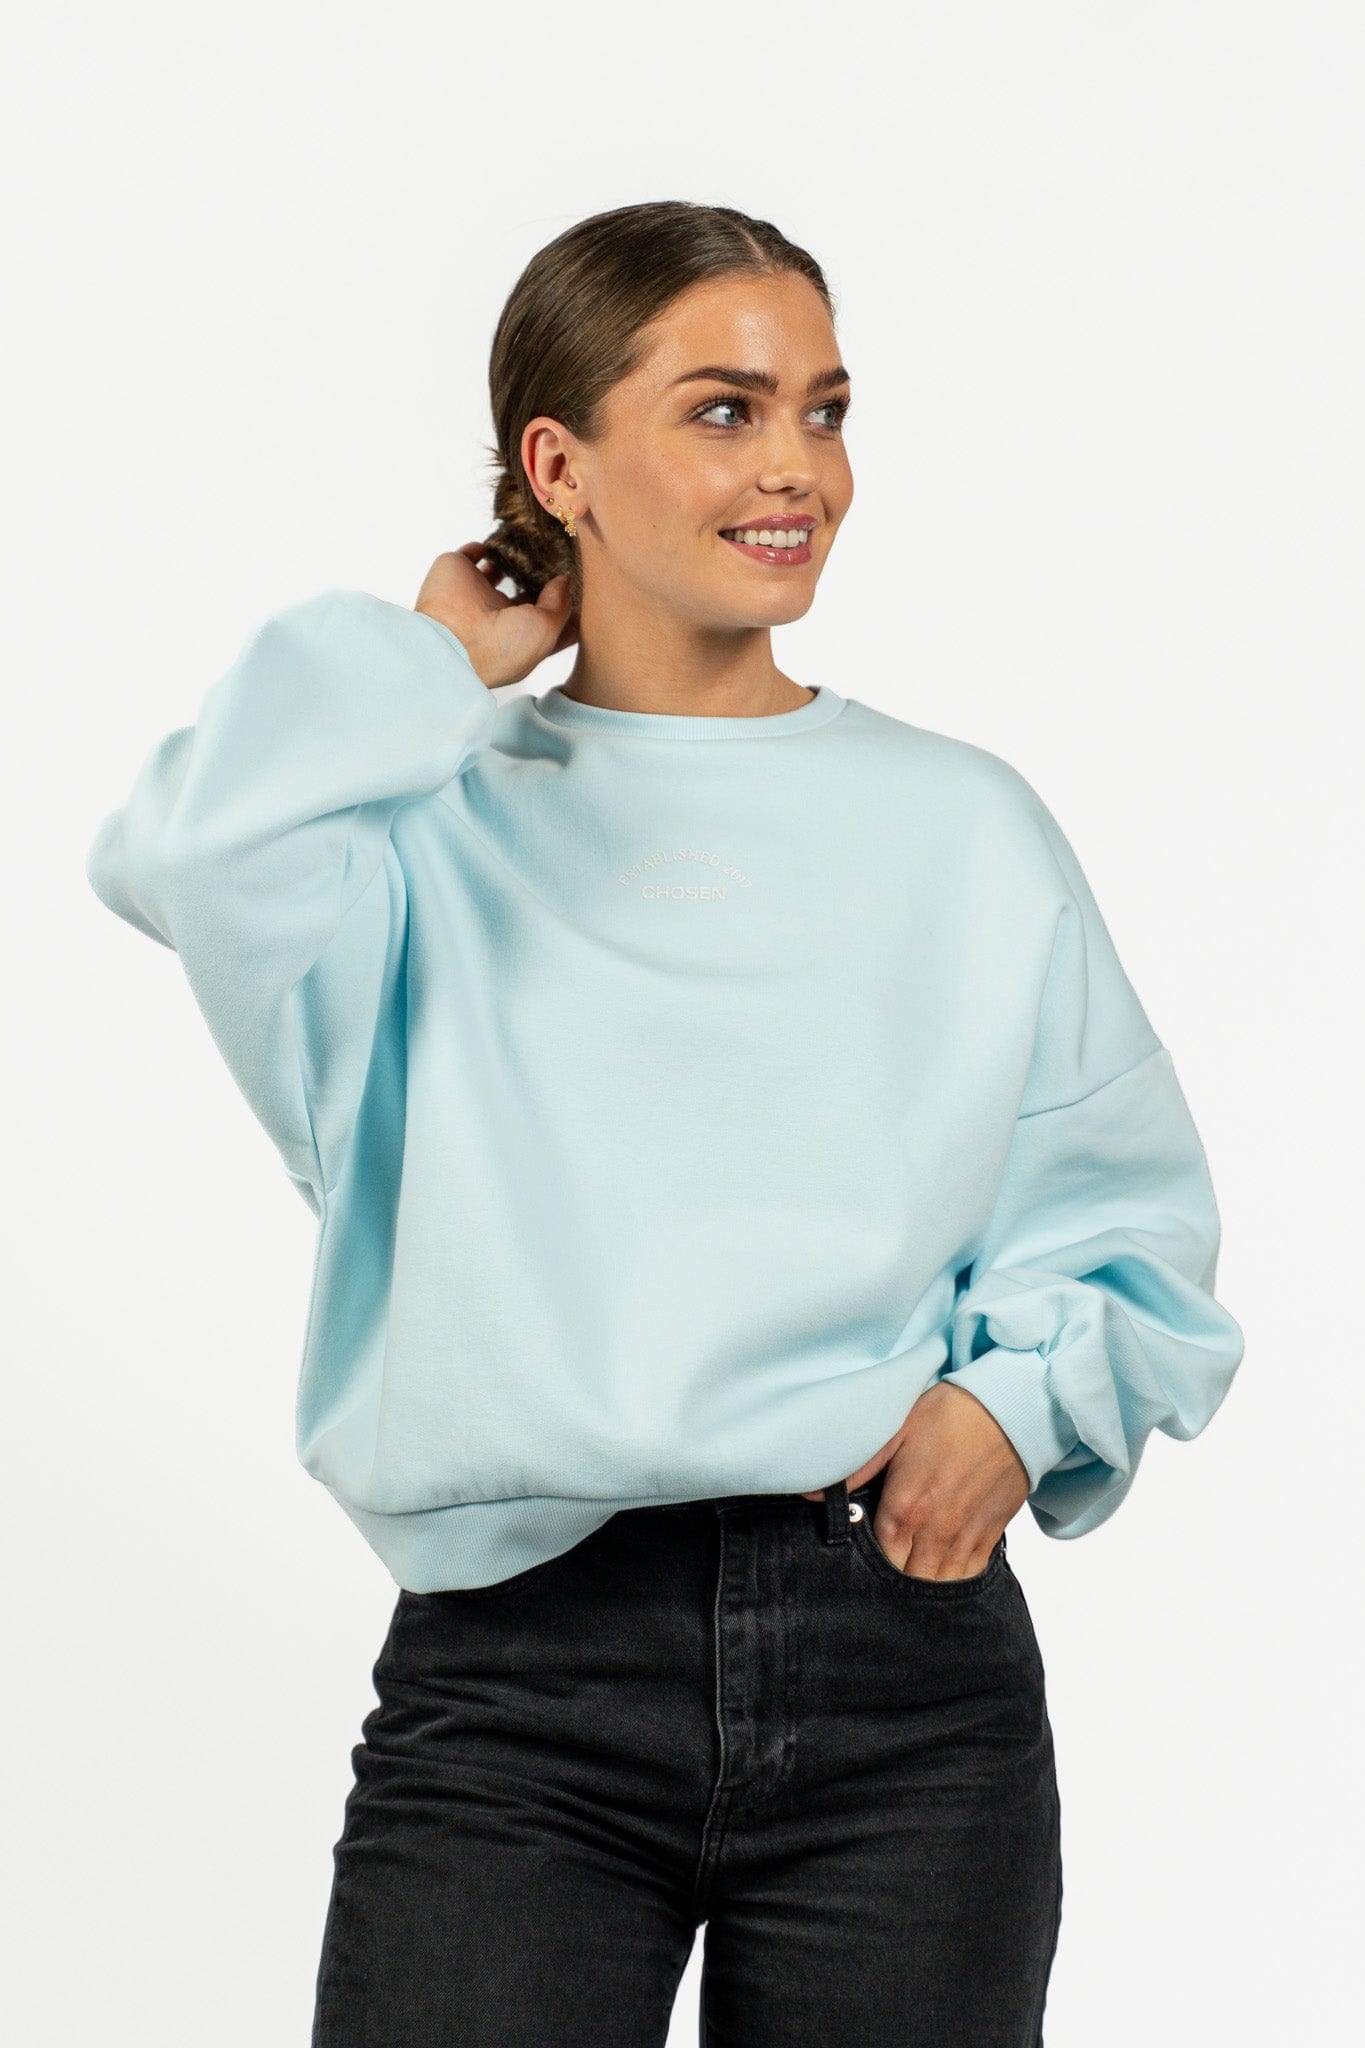 The Skyblue Sweatshirt